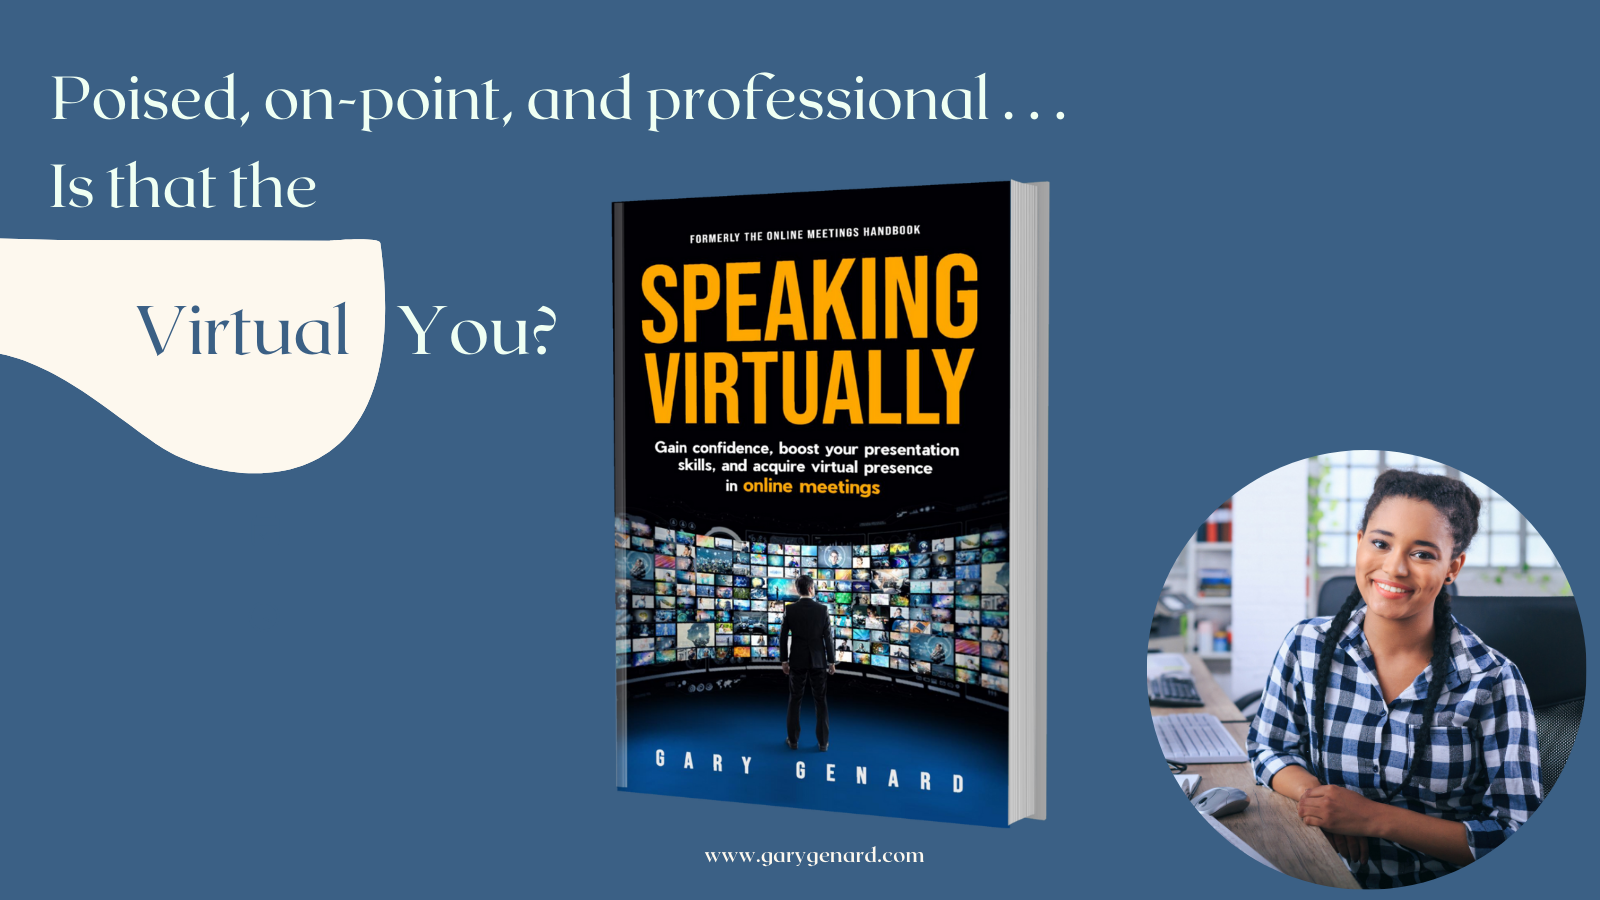 Dr. Gary Genard's handbook for online presentations, Speaking Virtually.